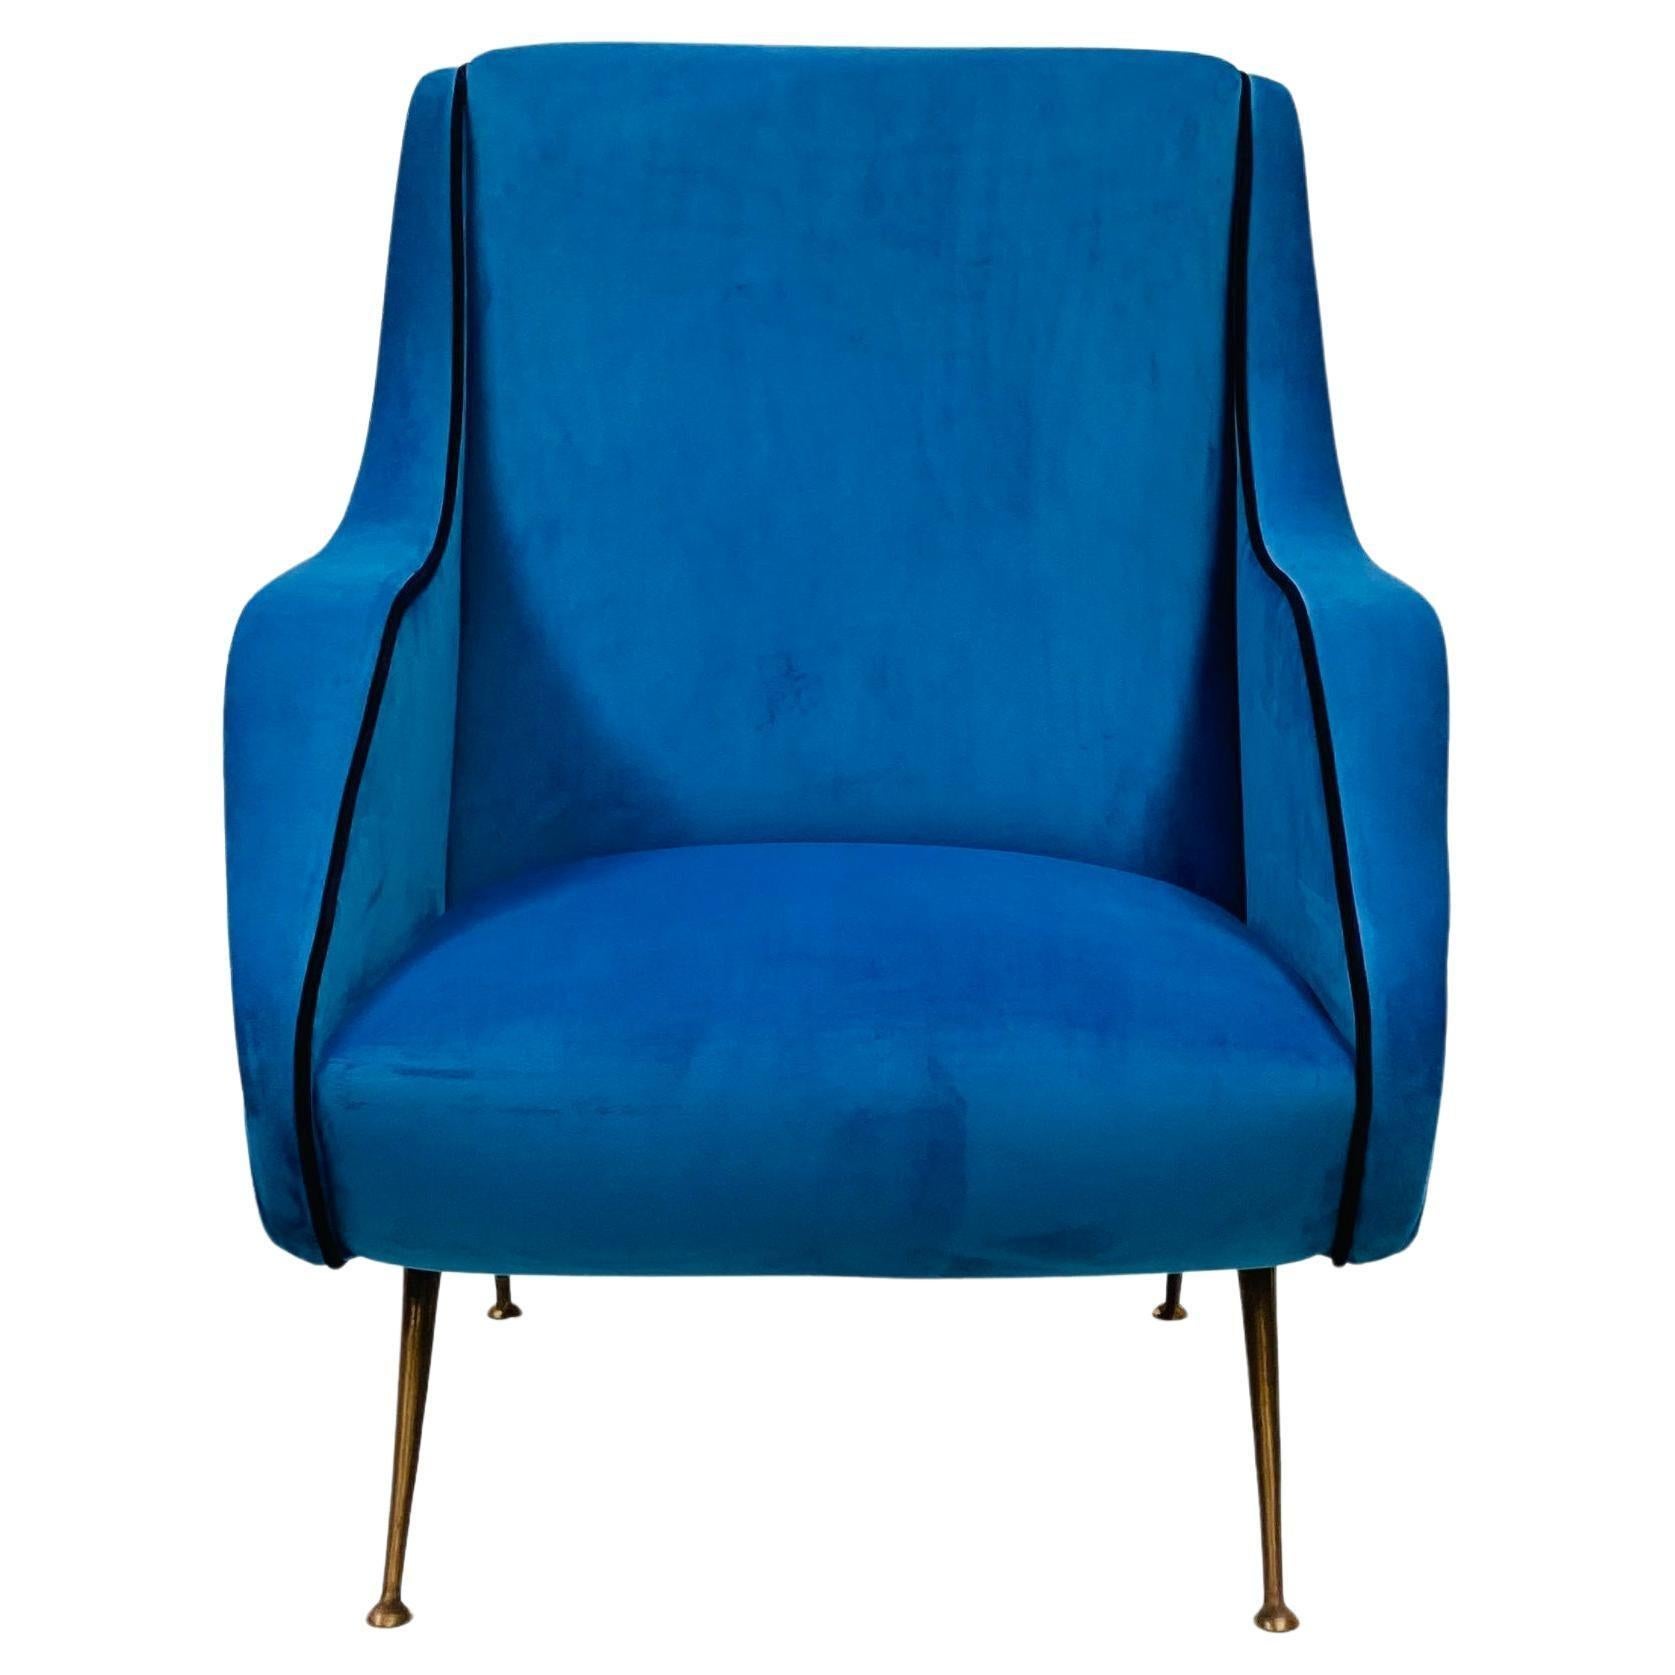 20th Century Vintage Italian Blue Velvet Armchair with Brass Legs by Carlo de Carli, 1950s For Sale